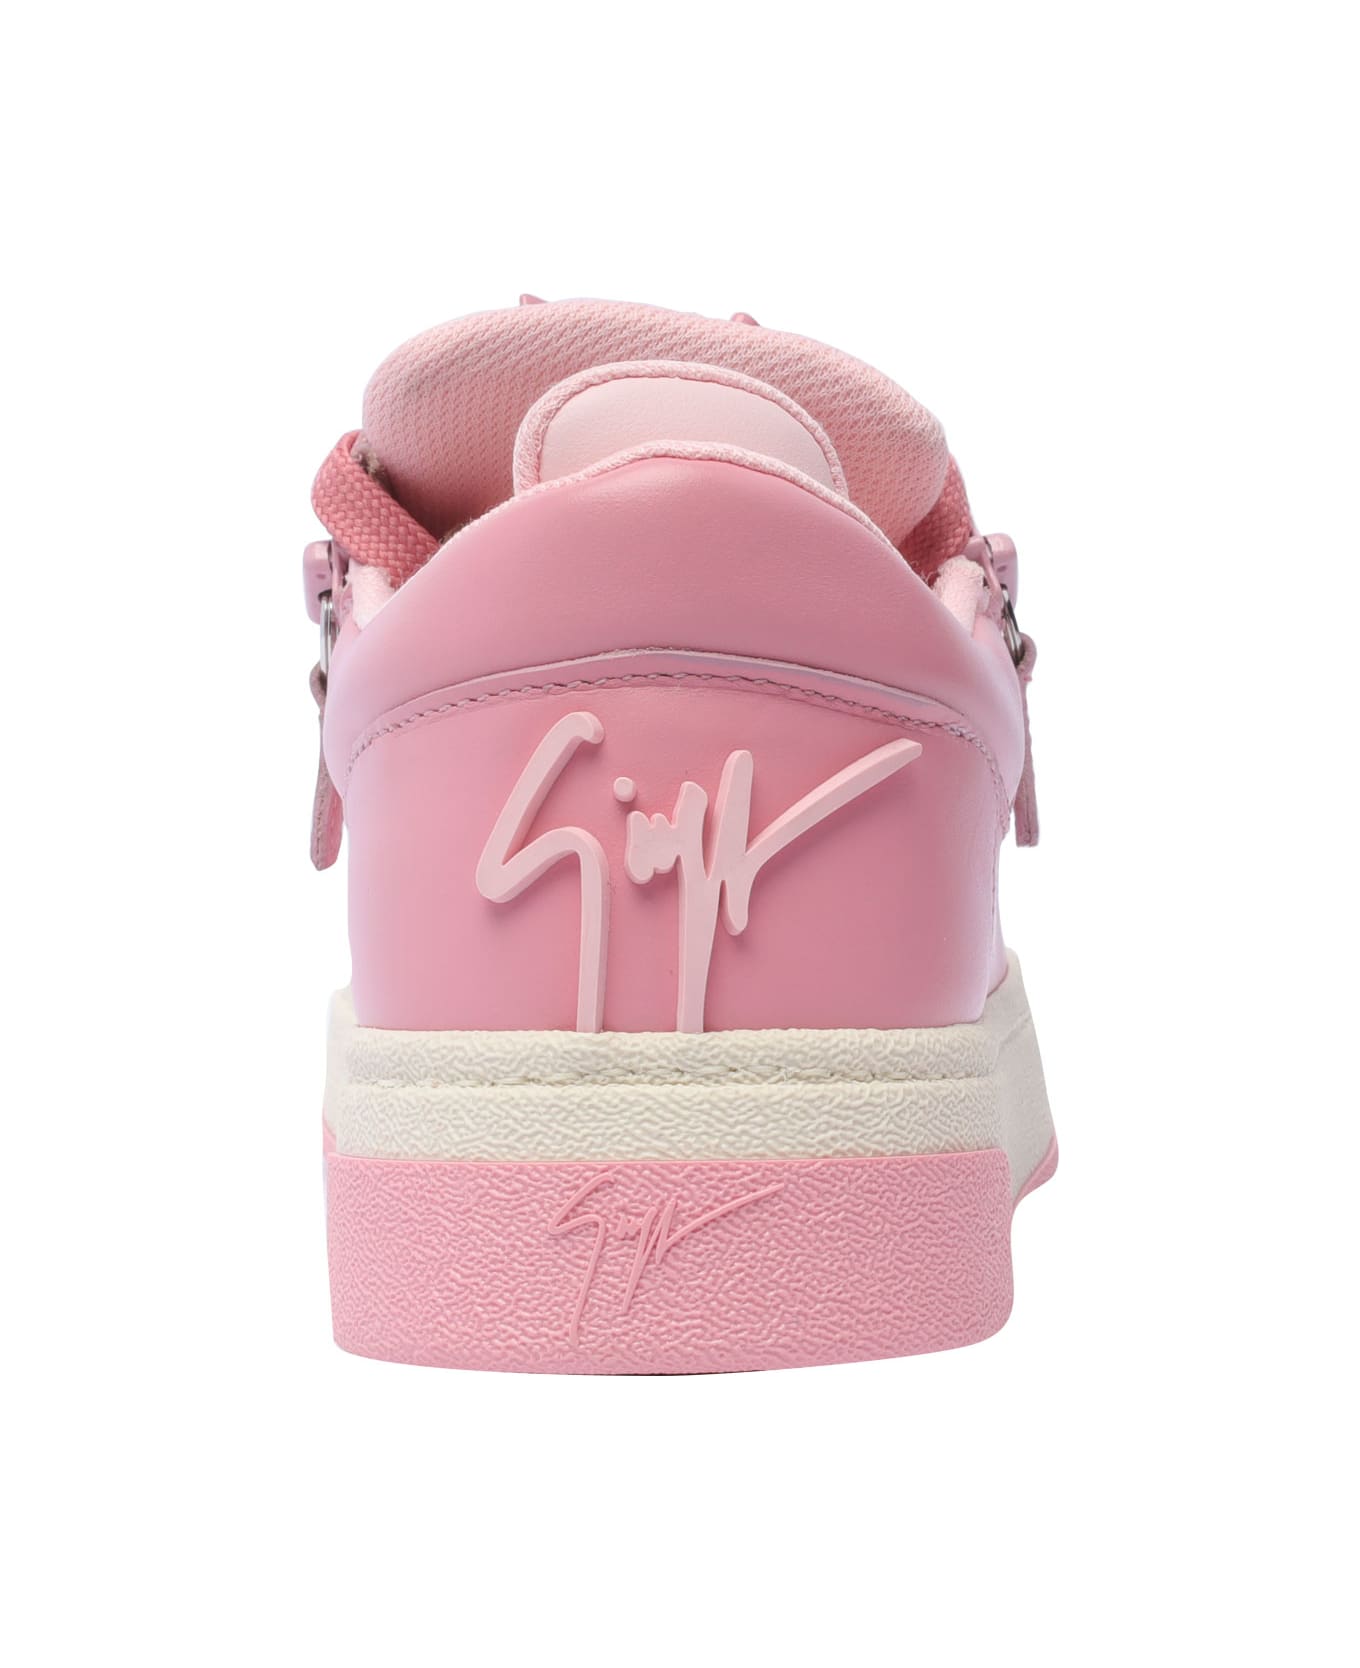 Giuseppe Zanotti Gz94 Sneakers - Pink